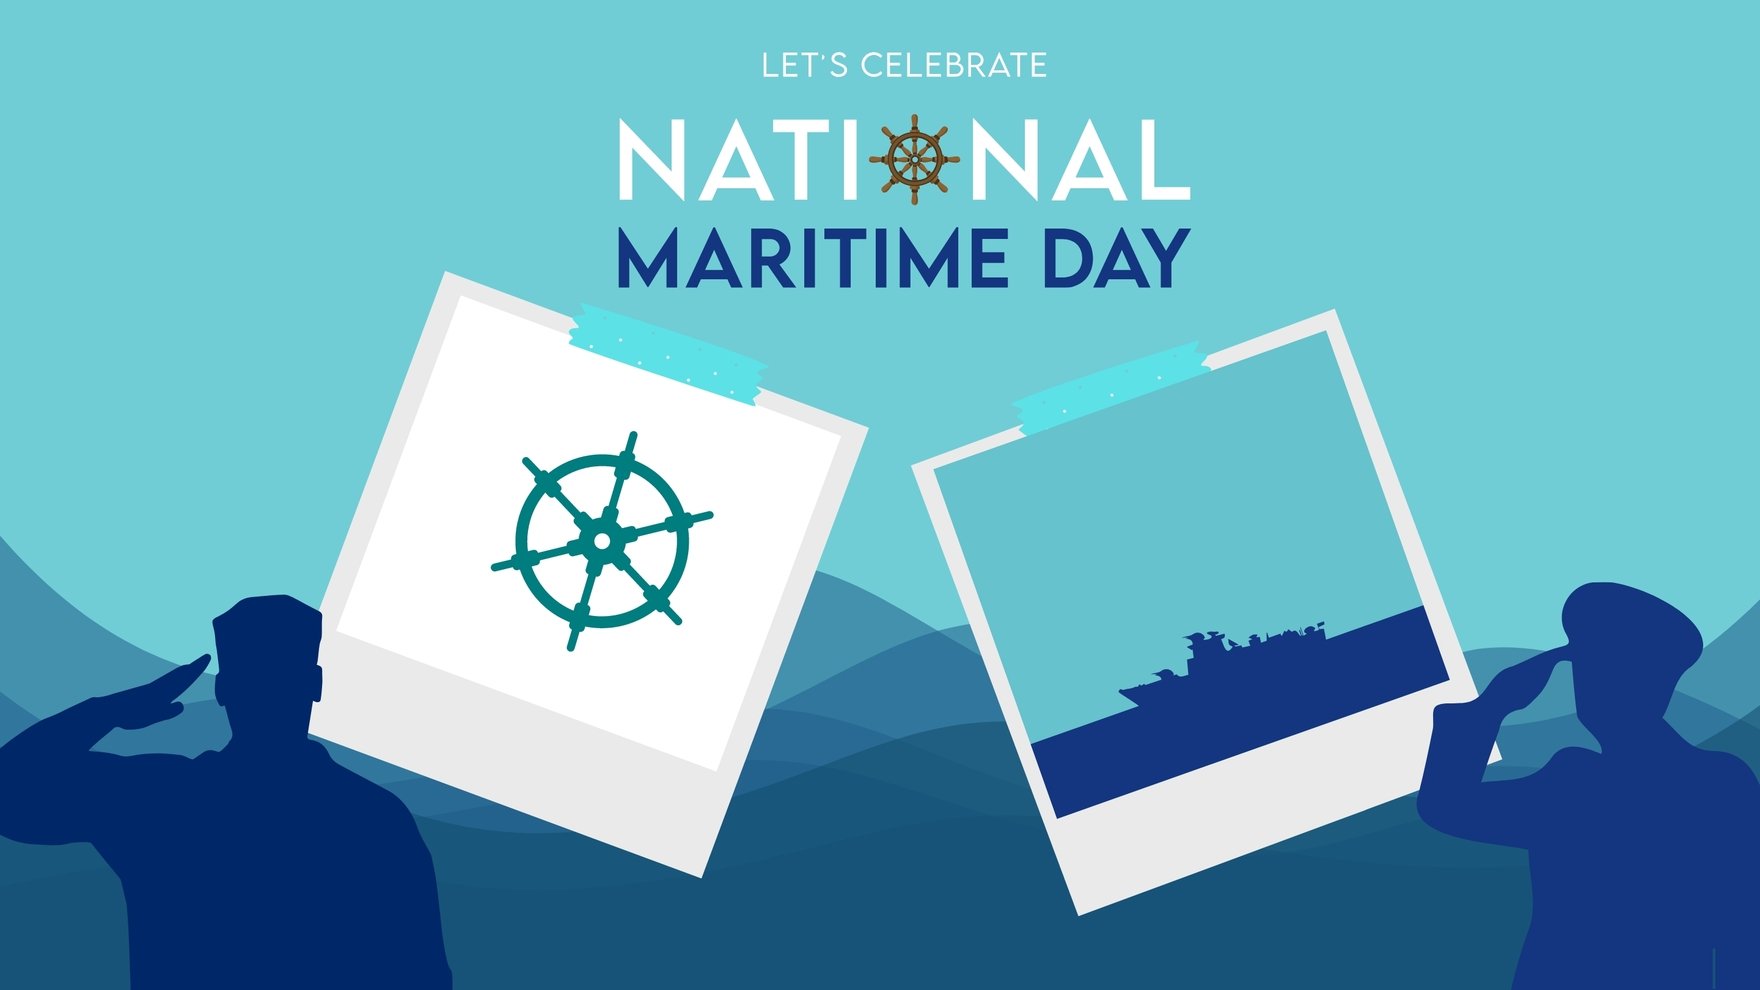 Free National Maritime Day Image Background in PDF, Illustrator, PSD, EPS, SVG, JPG, PNG